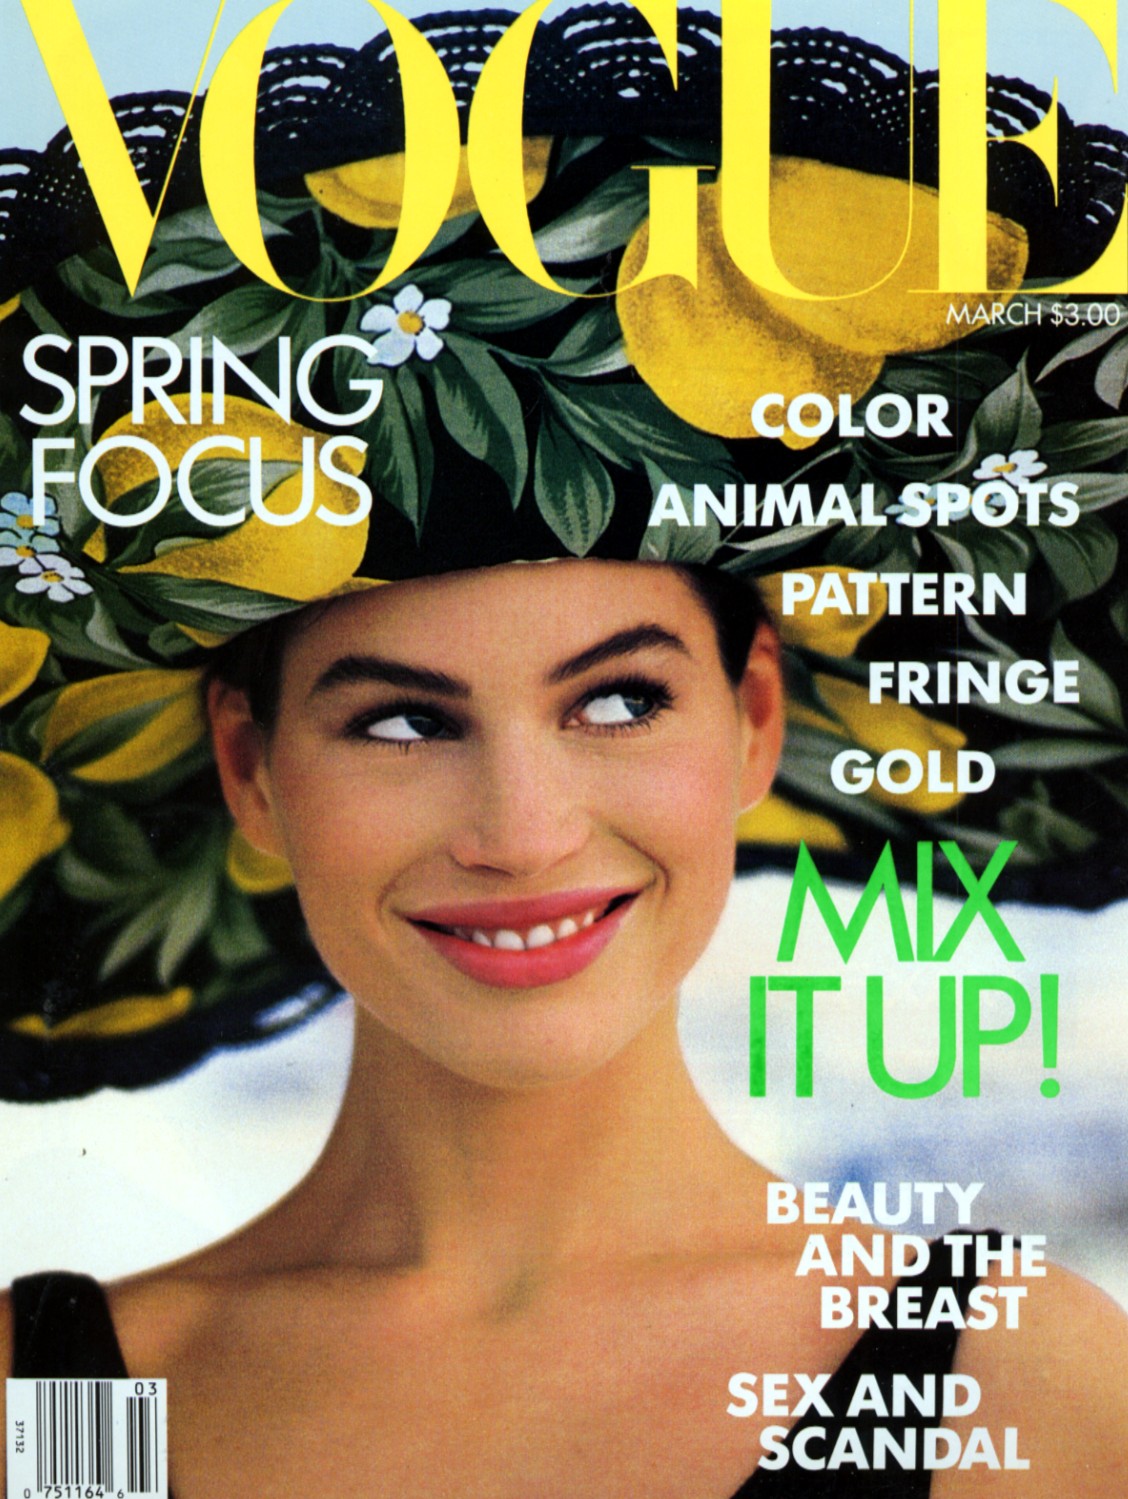 http://3.bp.blogspot.com/-t13i0prXbi4/Tg45kPM60bI/AAAAAAAABro/Qp6AnRmgT6o/s1600/Carre+US+Vogue+March+1989.jpg